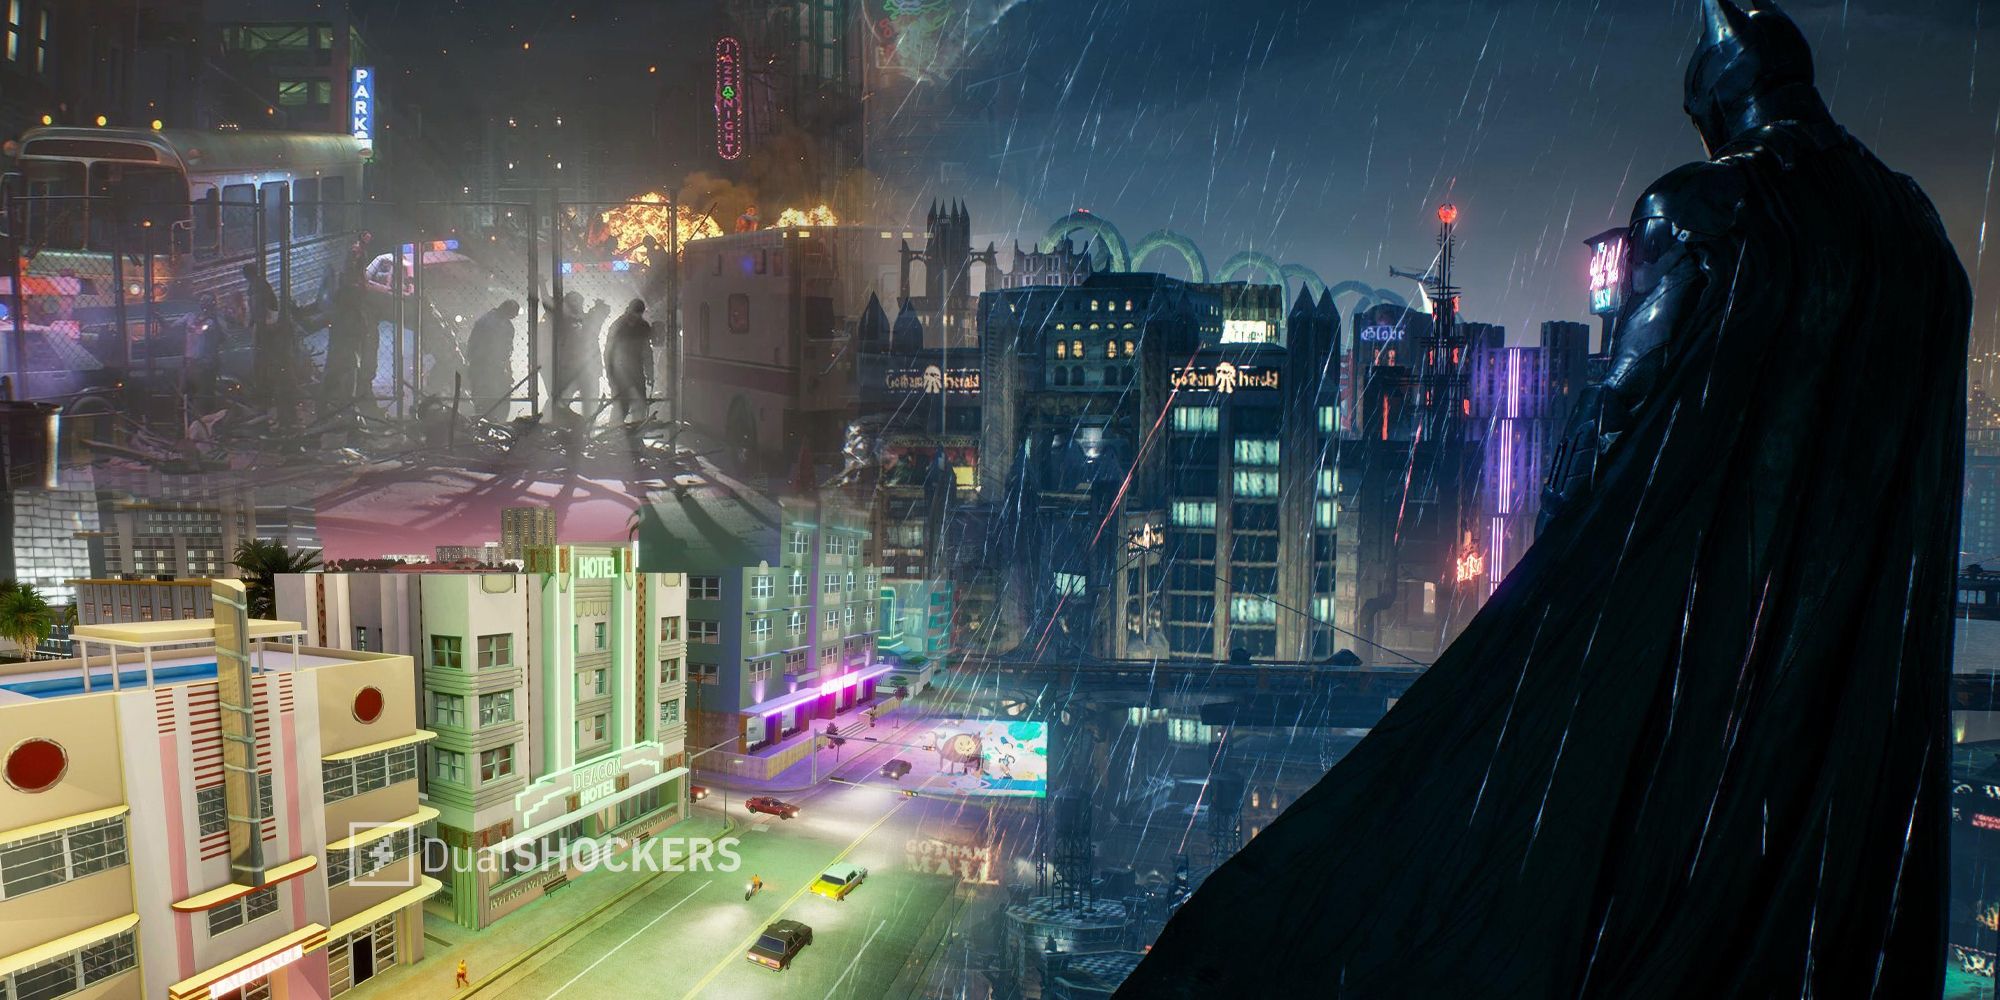 Vice City GTA, Gotham City Arkham Knight, Racoon City Resident Evil gameplay